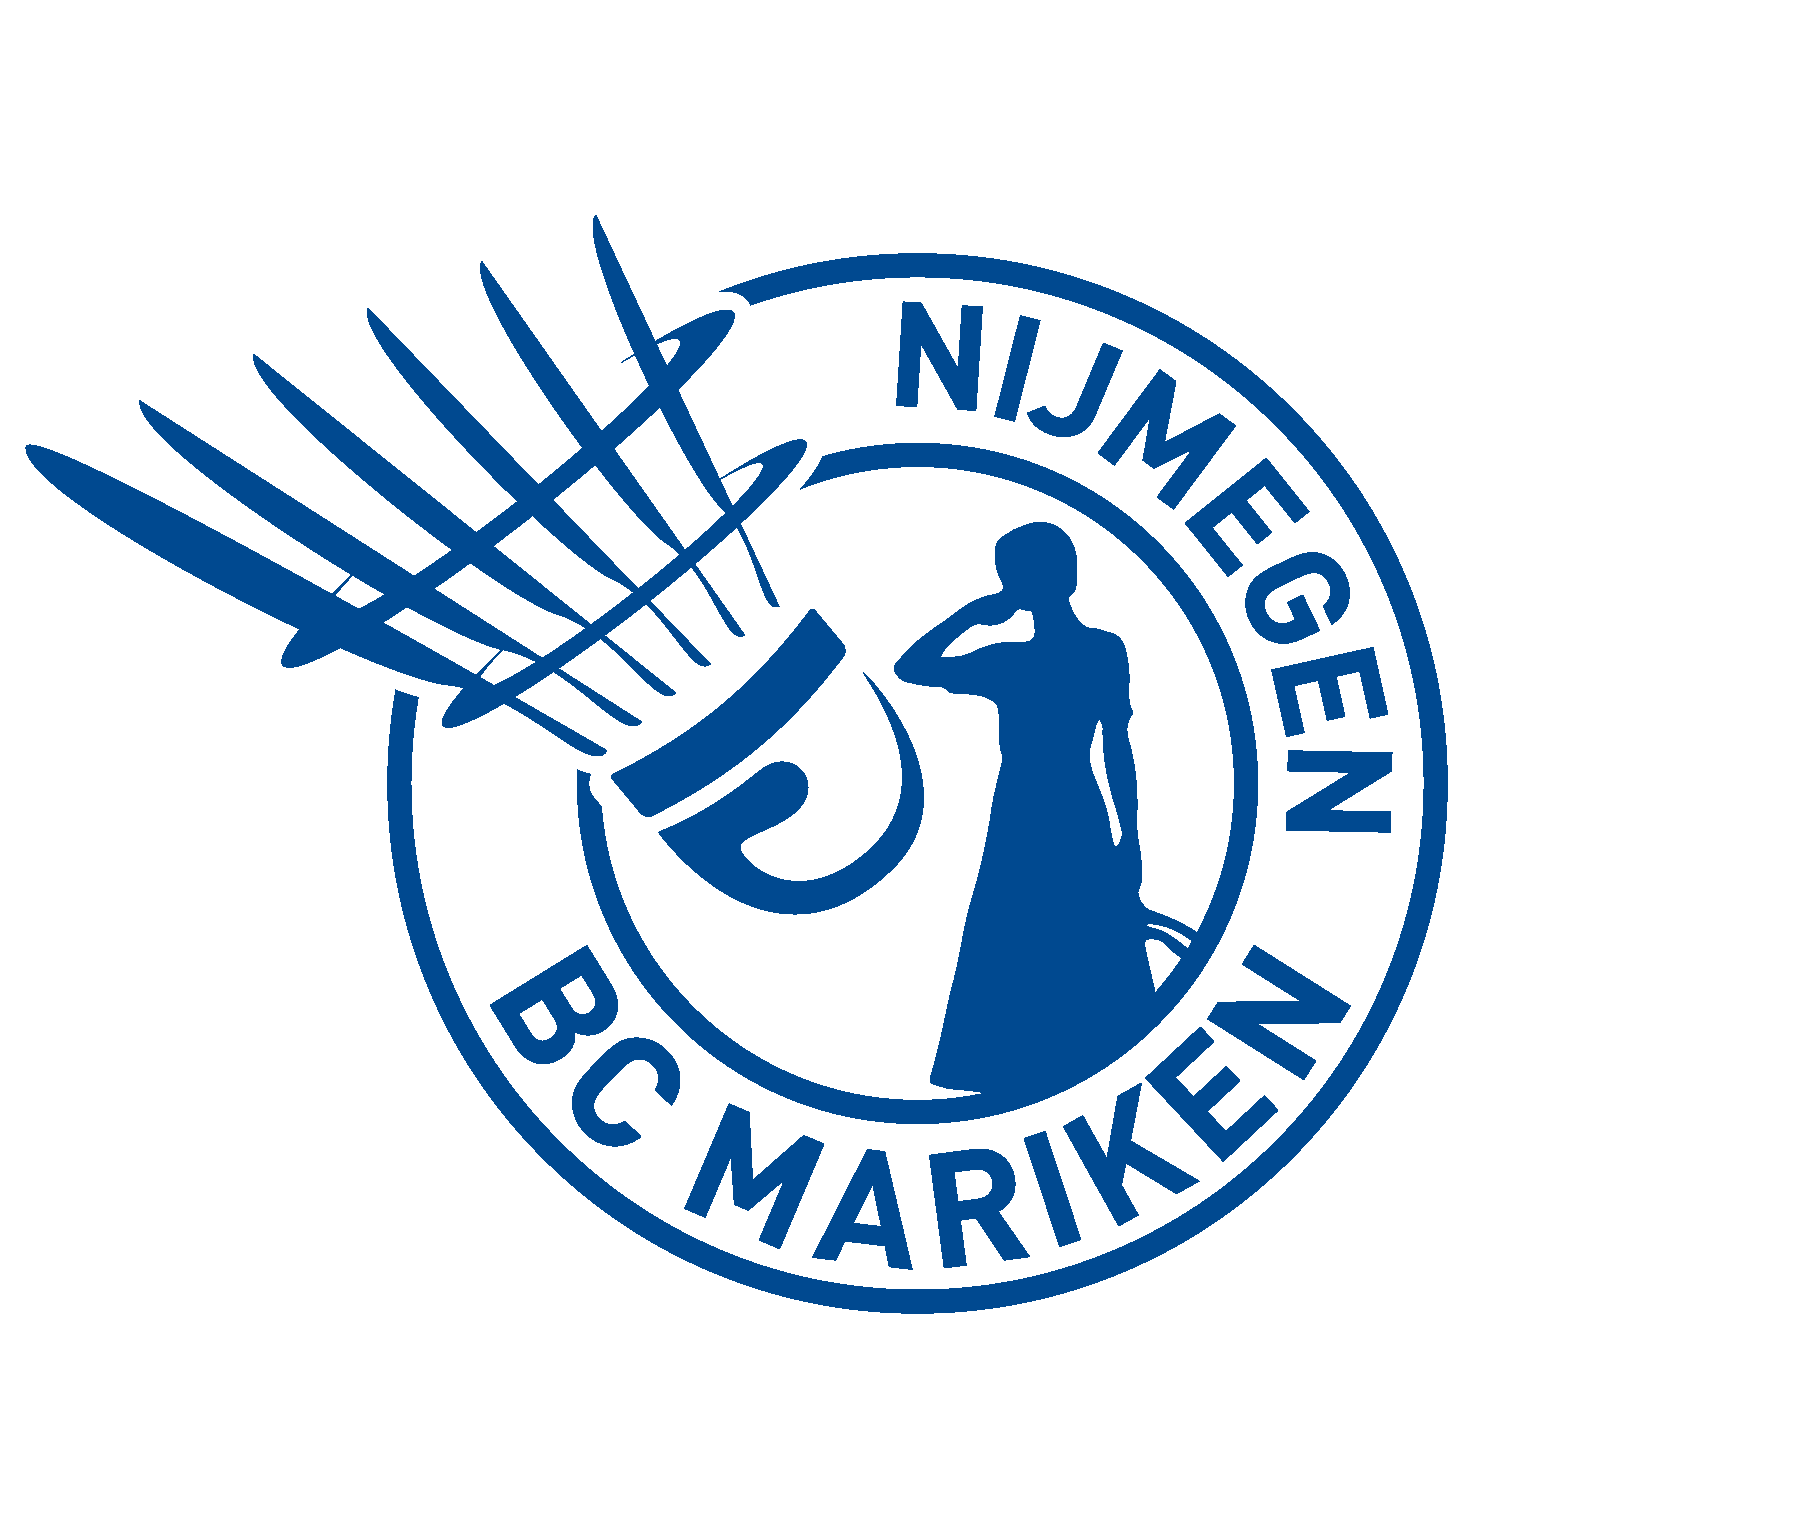 Badmintonclub Mariken